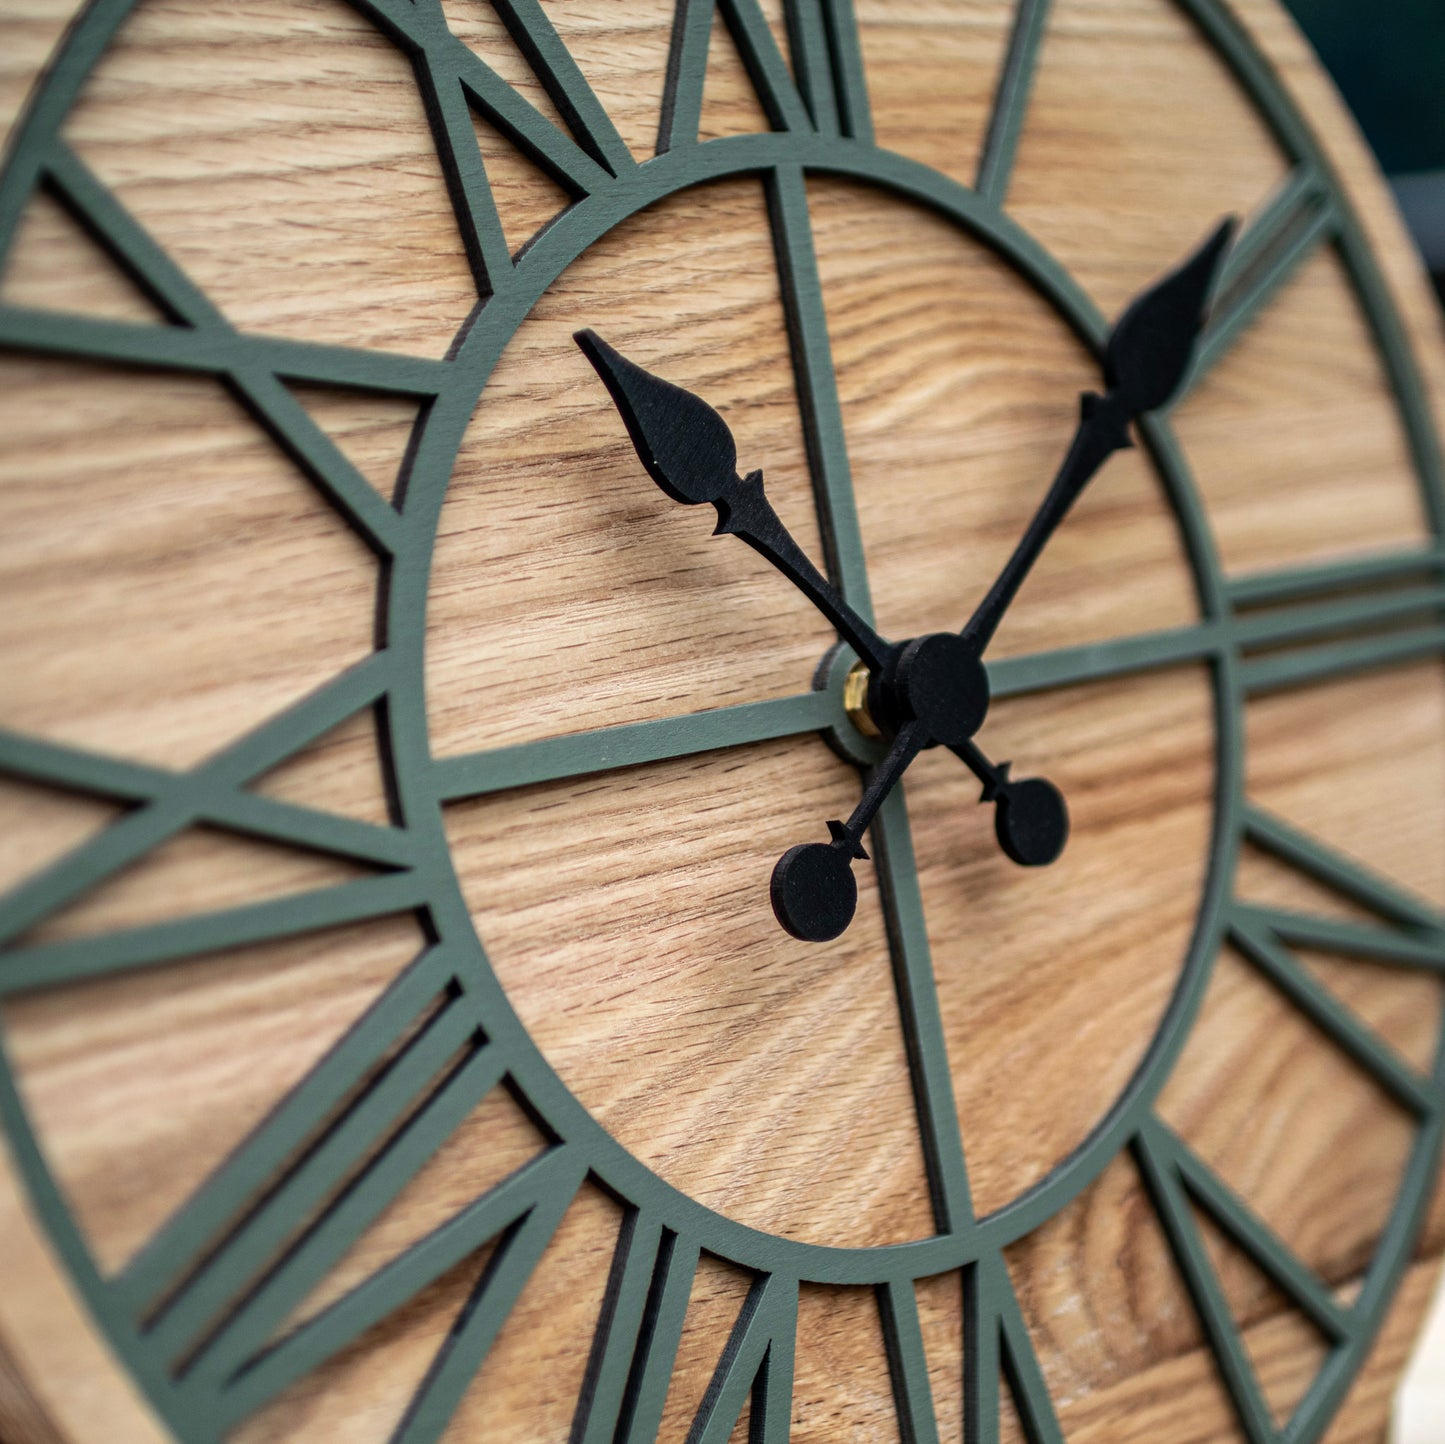 100% Solid Oak Wooden Wall Clock | Round Green Skeleton Clock | Rustic Clock